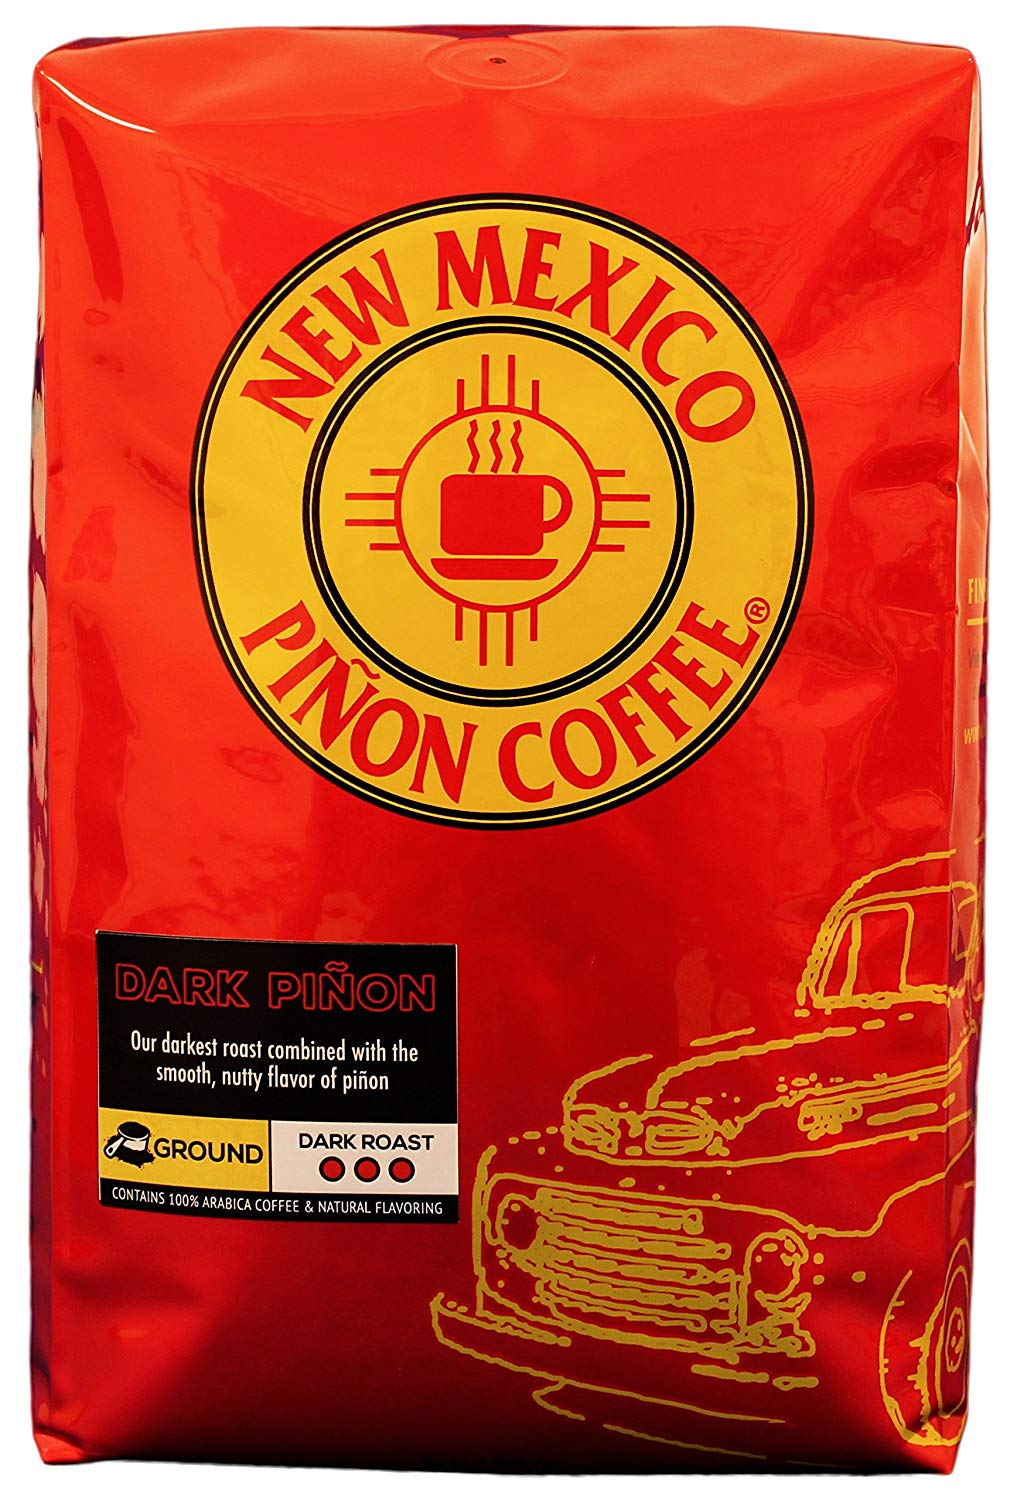 New Mexico Piñon Naturally Flavored Coffee - Dark Piñon Ground - 2 pound